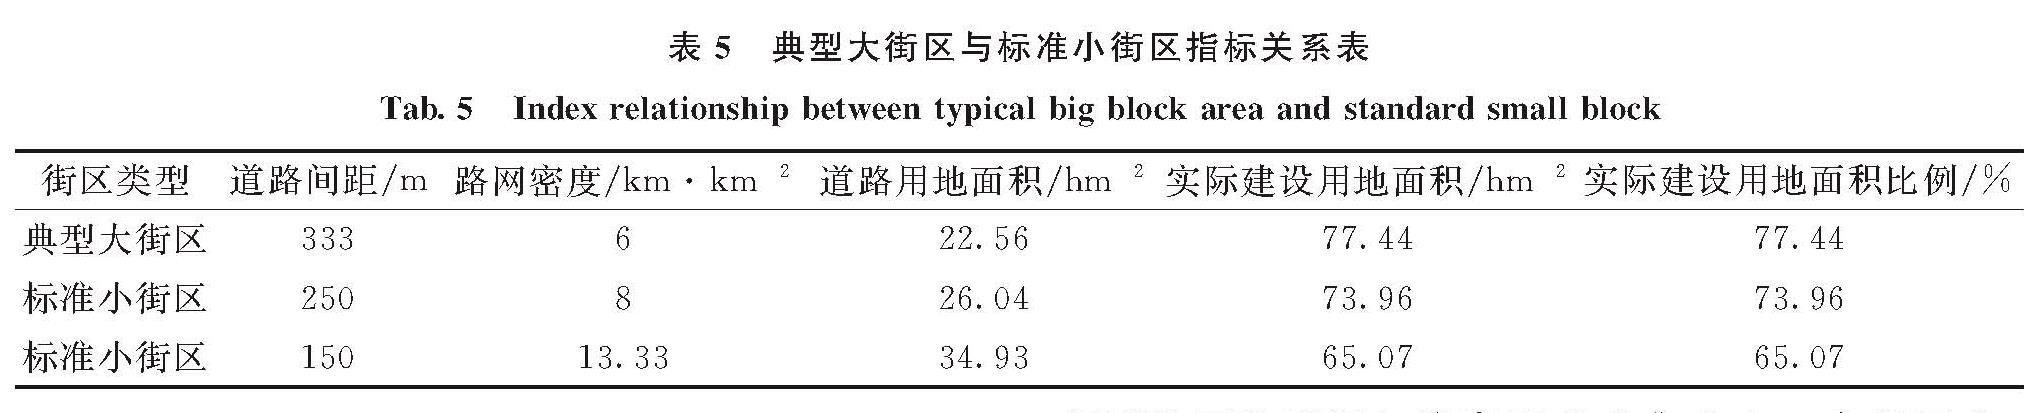 表5 典型大街区与标准小街区指标关系表<br/>Tab.5 Index relationship between typical big block area and standard small block